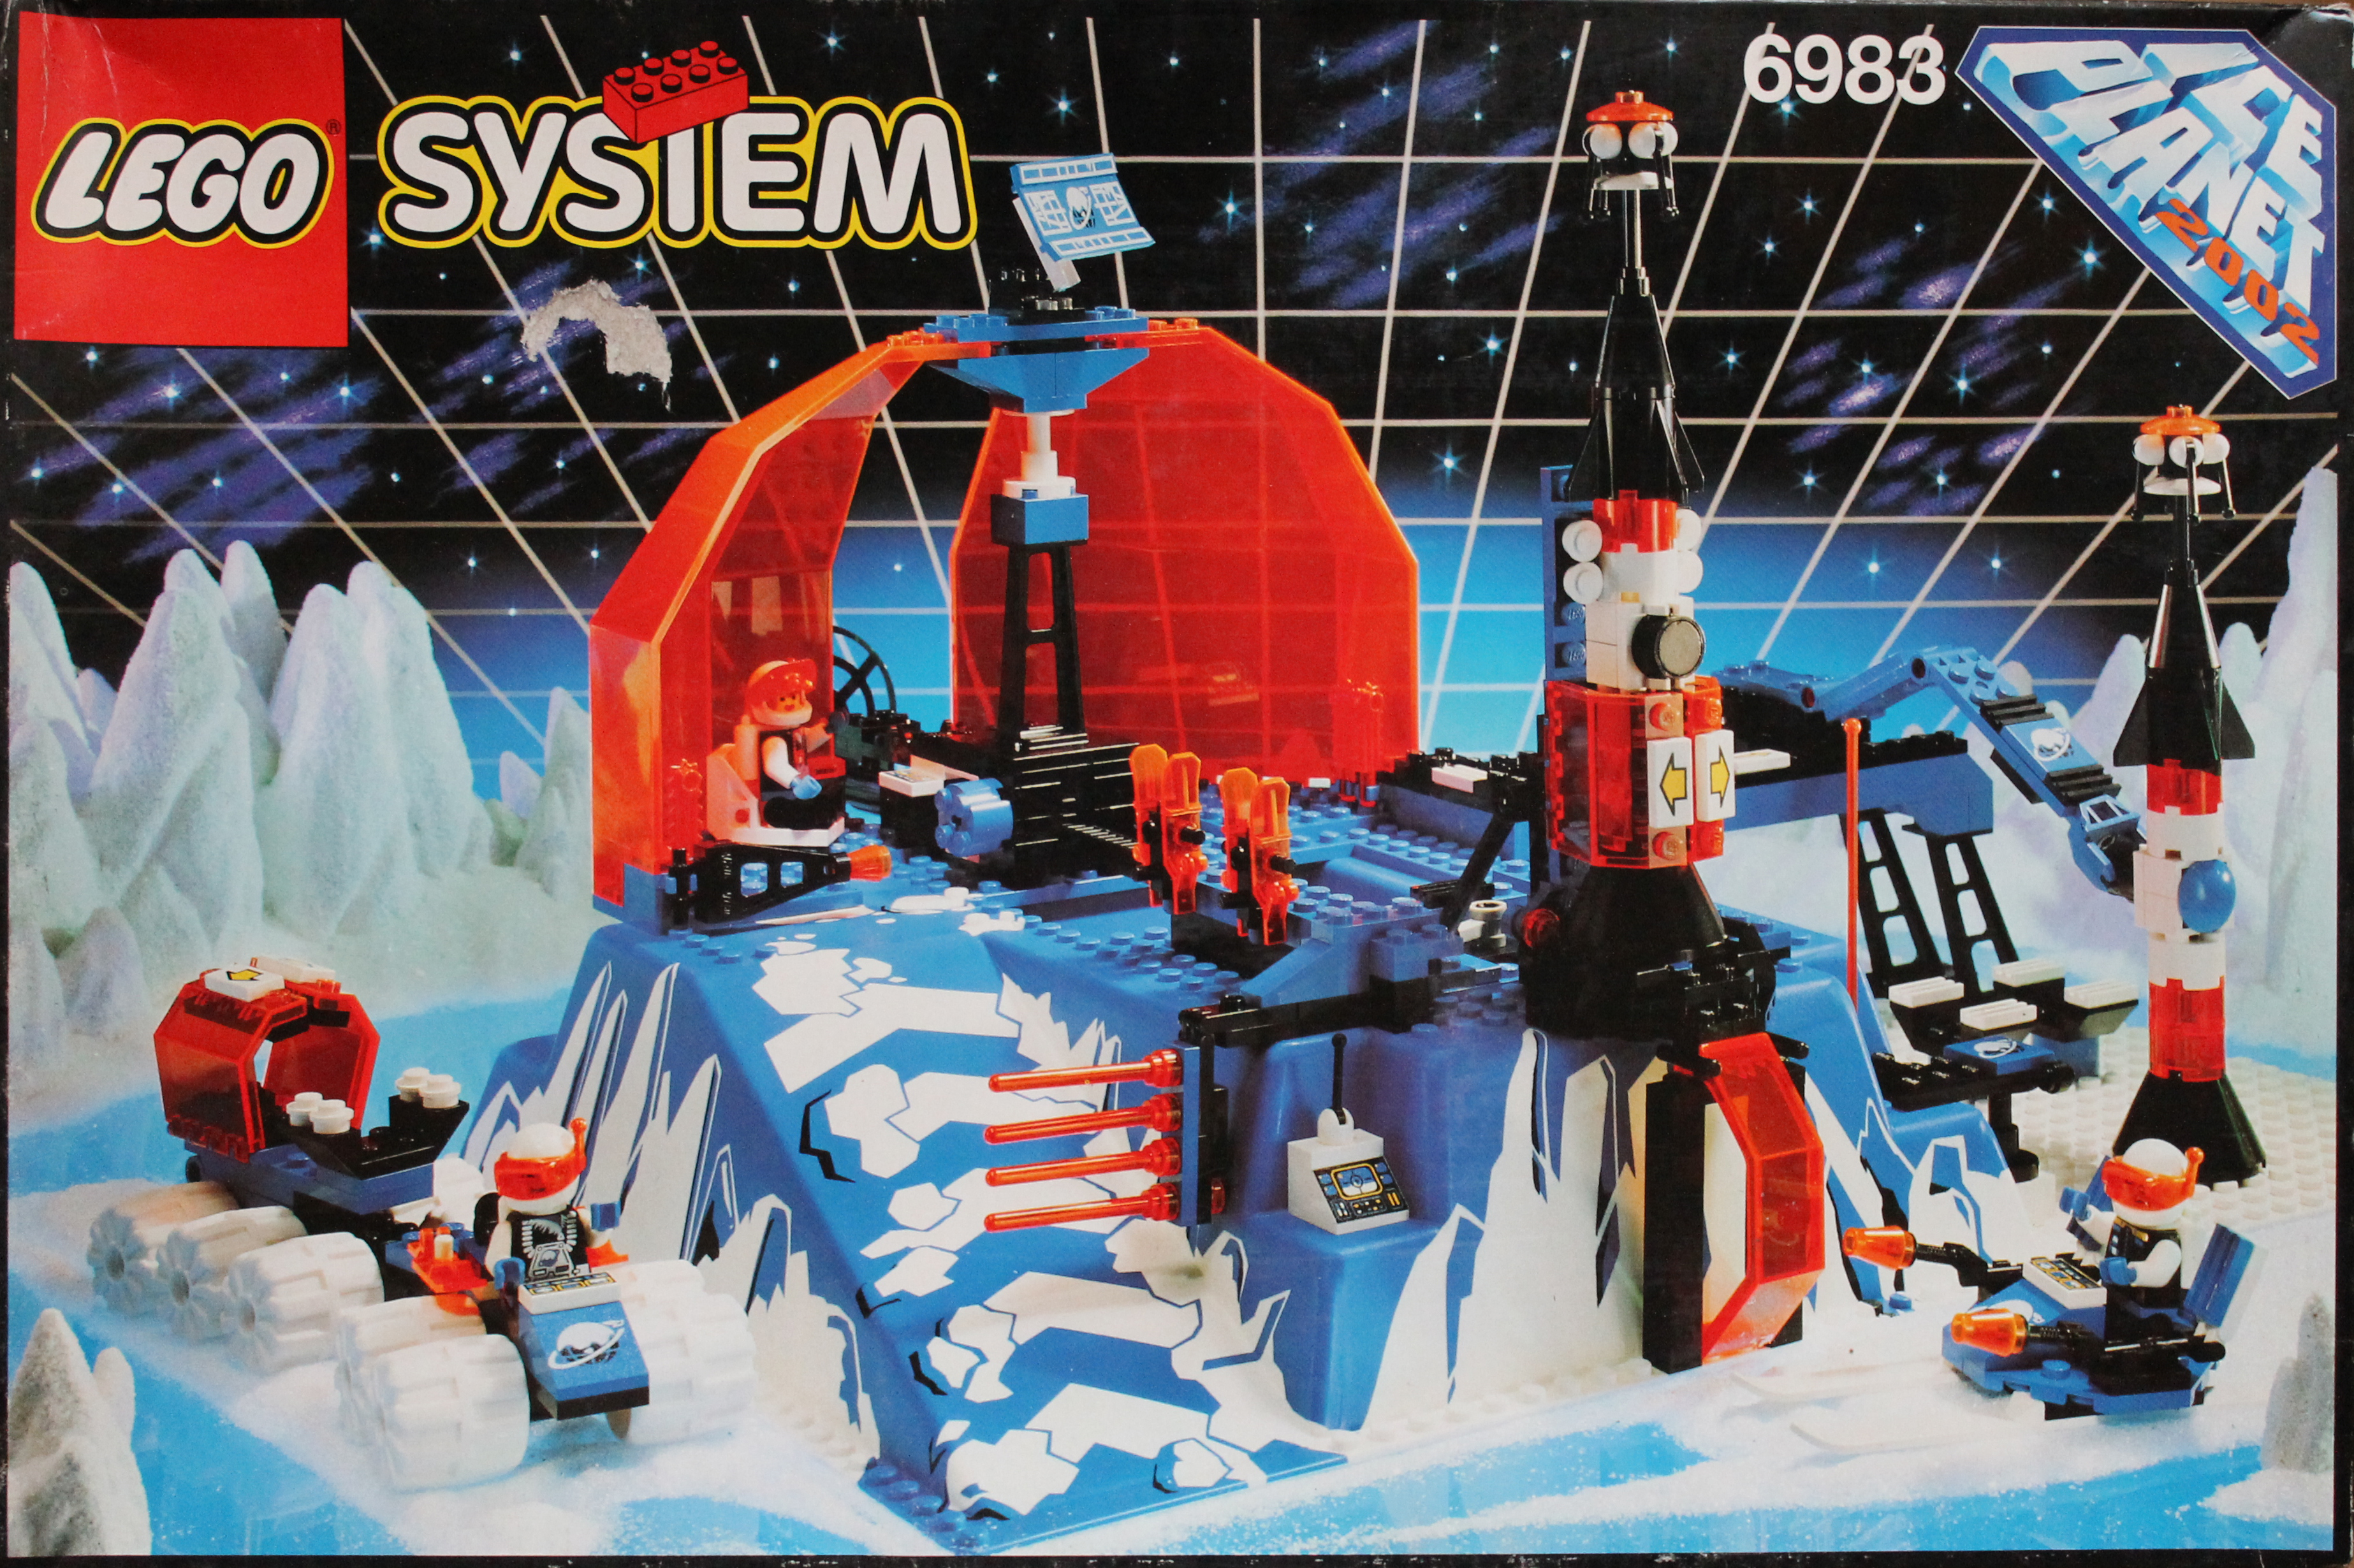 6983: Ice Station Odyssey